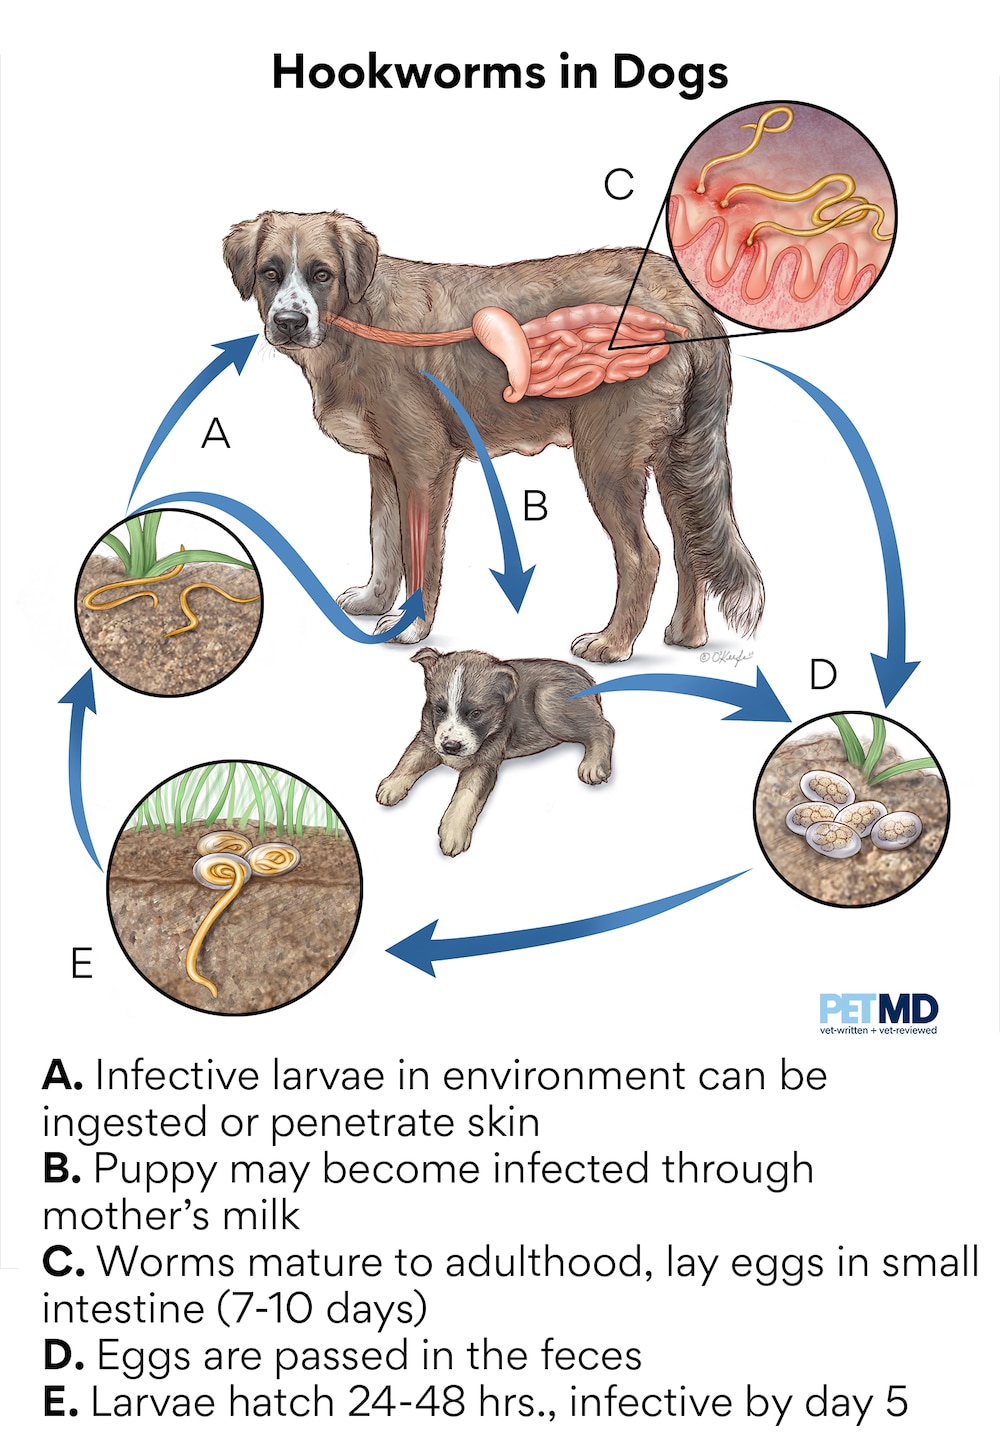 Hookworms in Dogs | PetMD